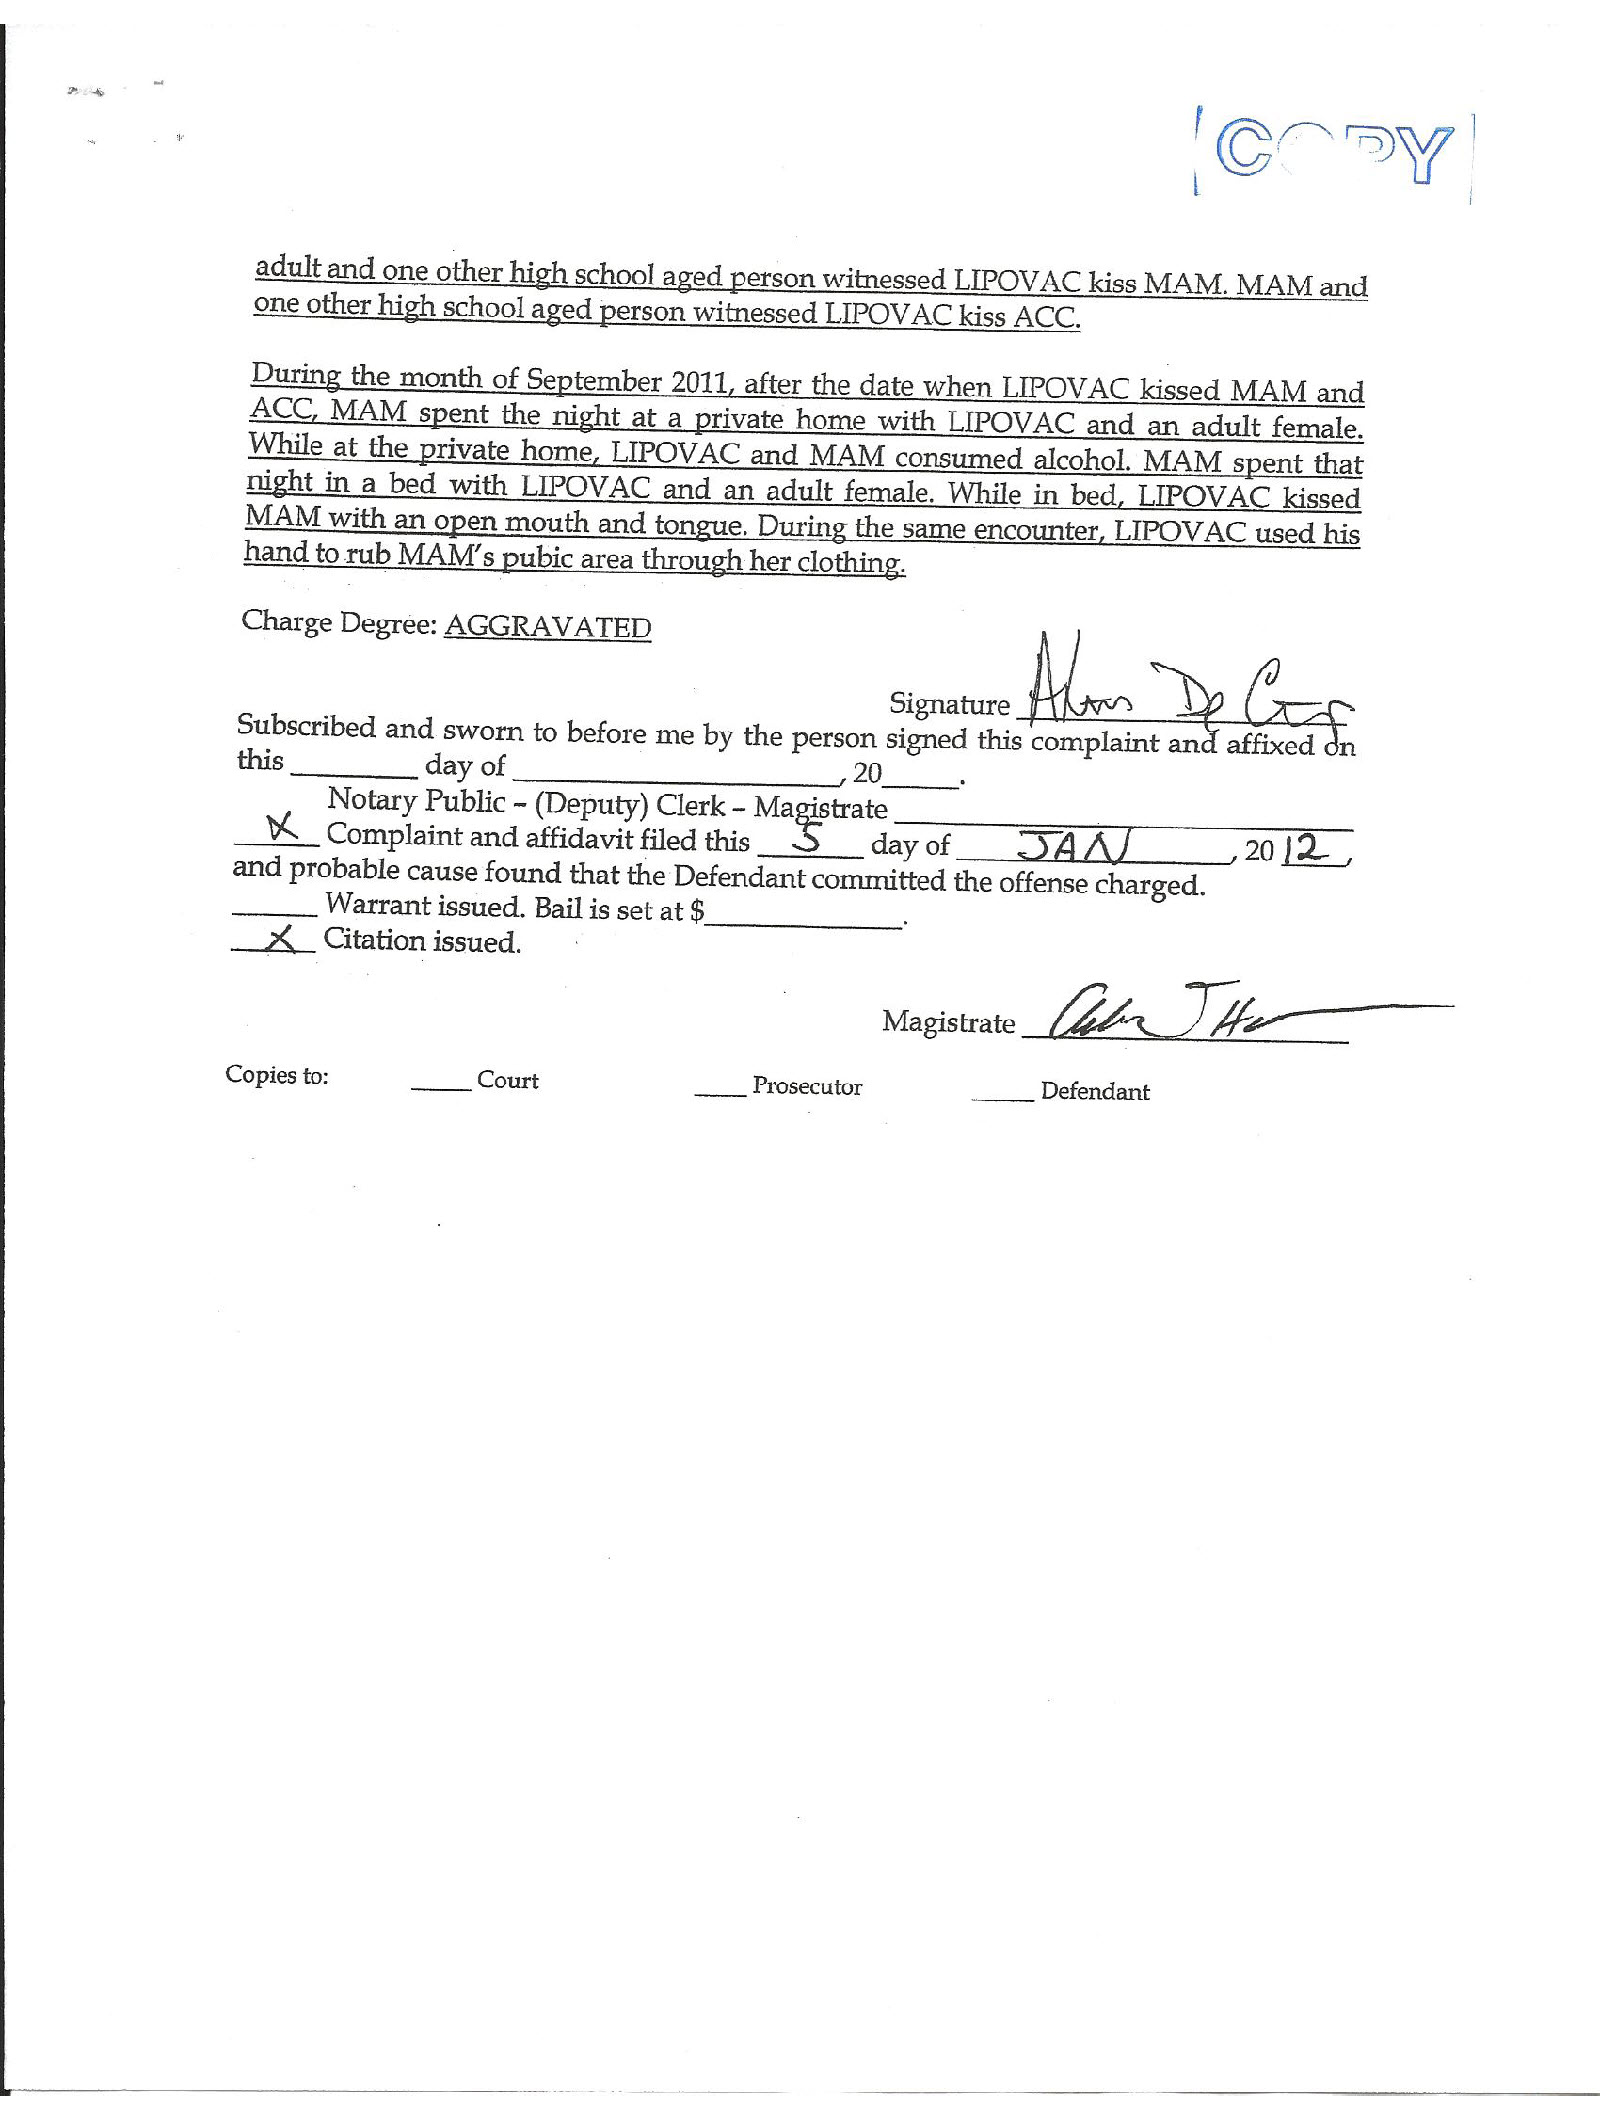 Copy of lipovac drew christopher arrest warrant7.jpg